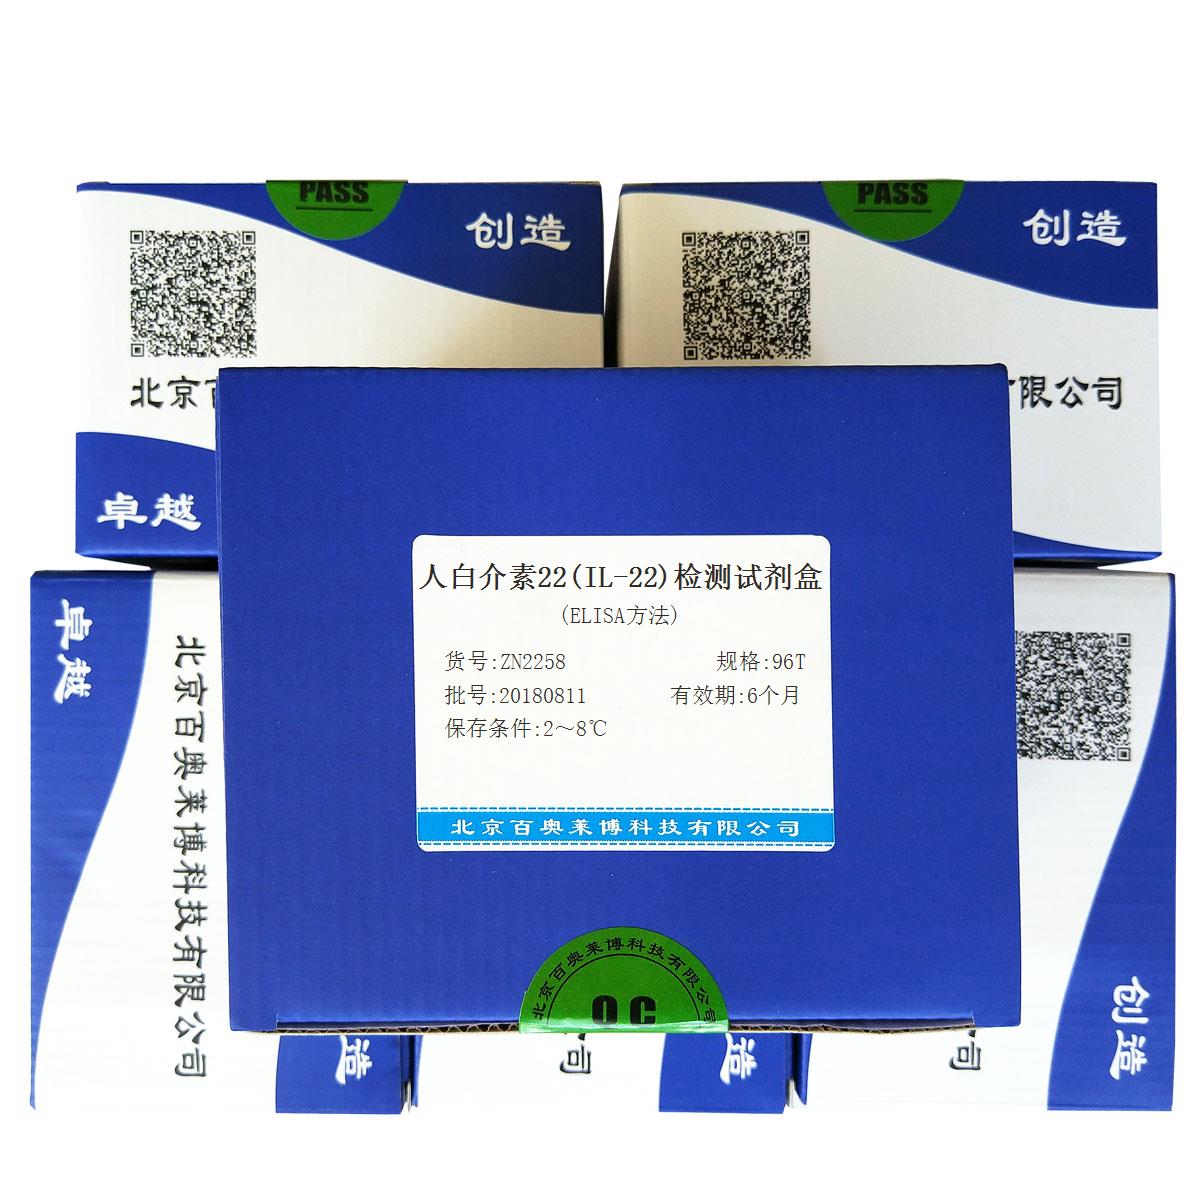 人白介素22(IL-22)检测试剂盒(ELISA方法)